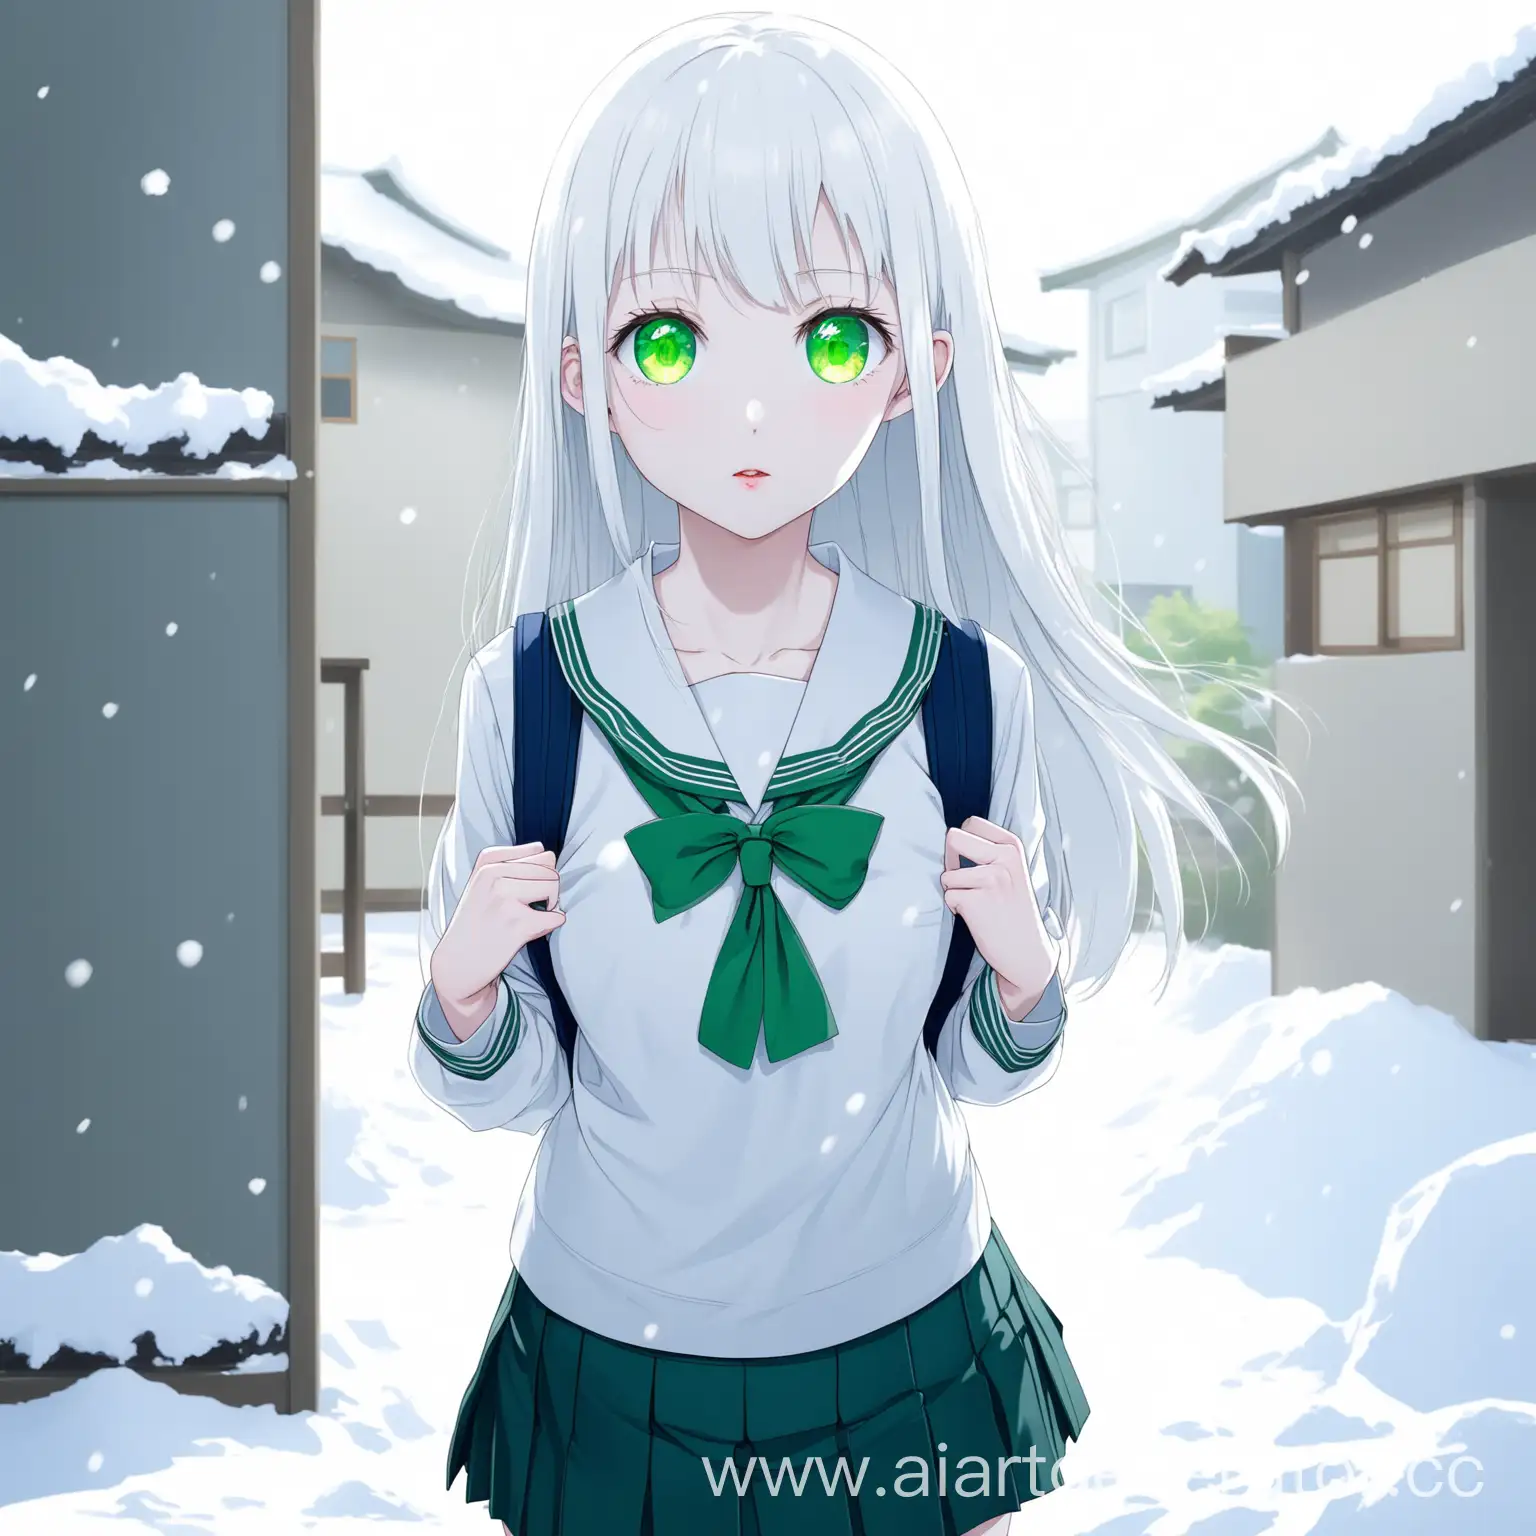 Japanese-Schoolgirl-in-Elegant-Uniform-with-SnowWhite-Skin